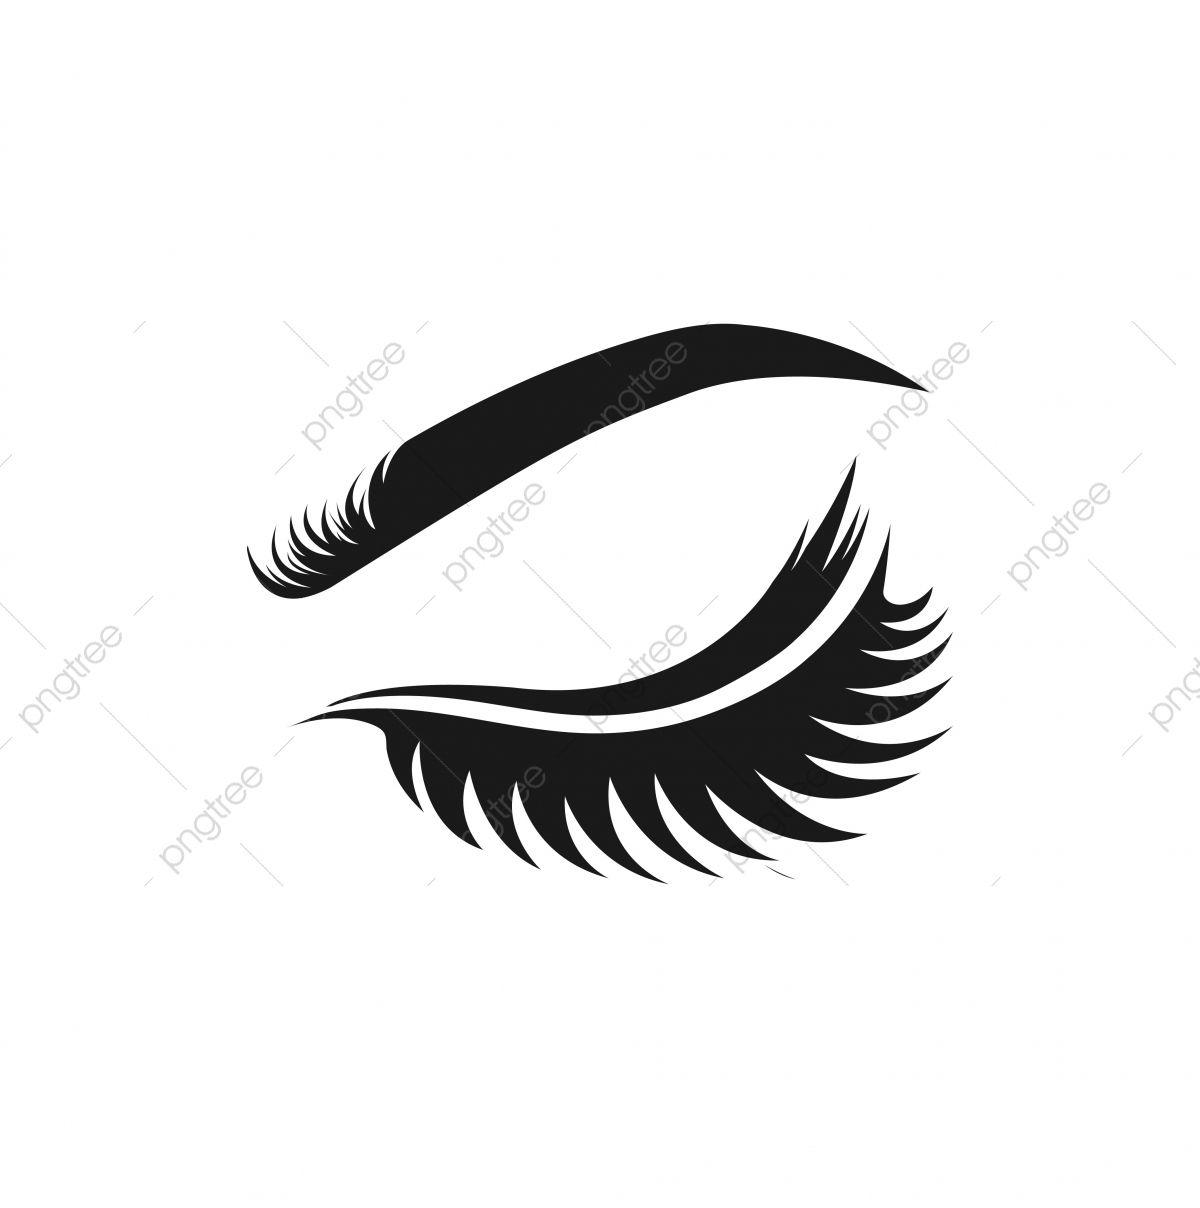 Eyelasshes Logo - Eyelashes Logo Design Vector, Makeup, Design, Art PNG and Vector